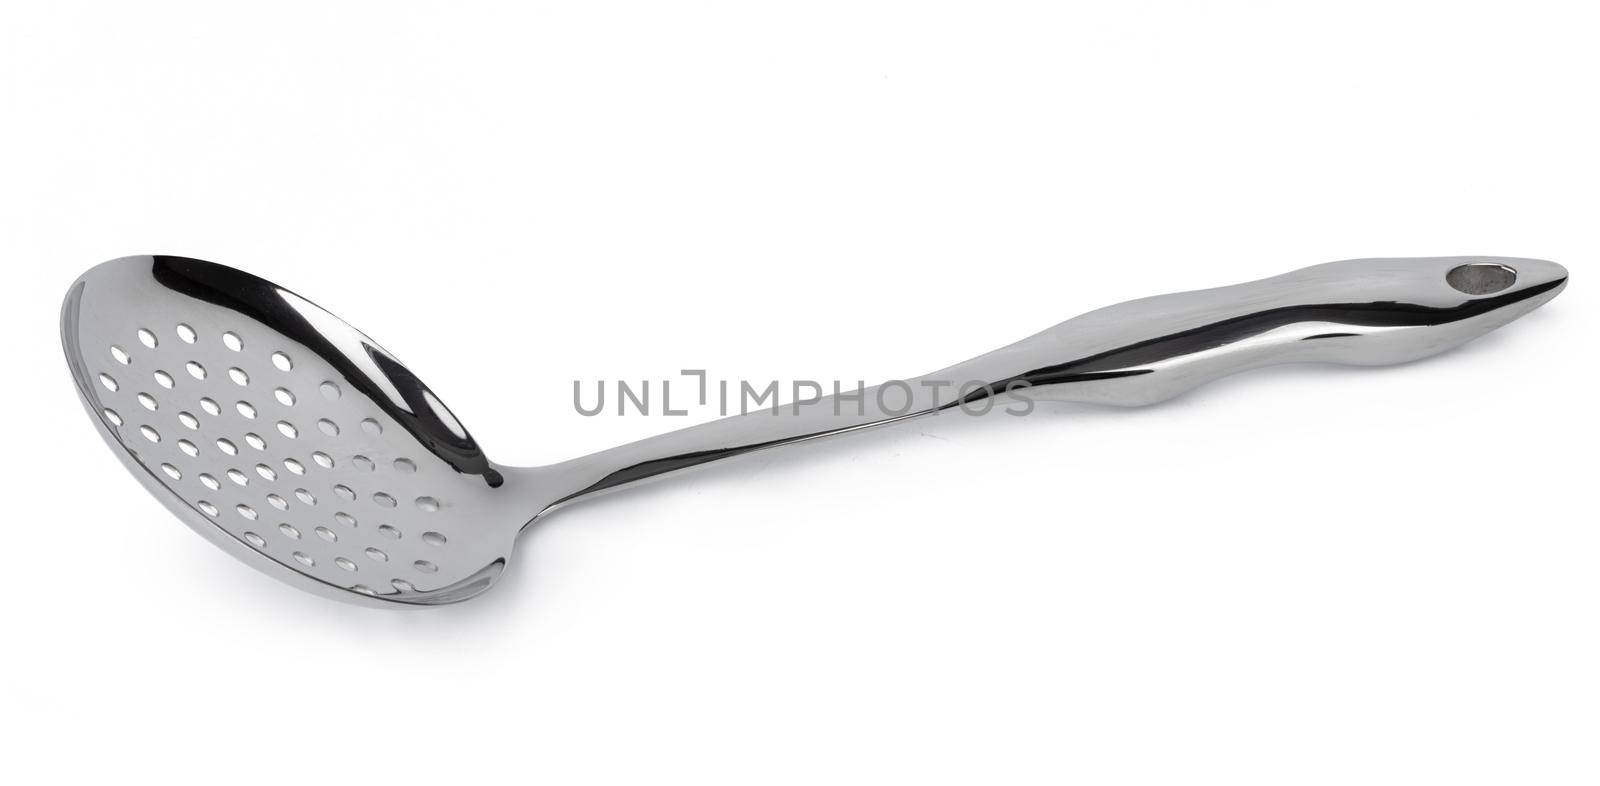 Aluminum new kitchen utensil isolated on white by Fabrikasimf